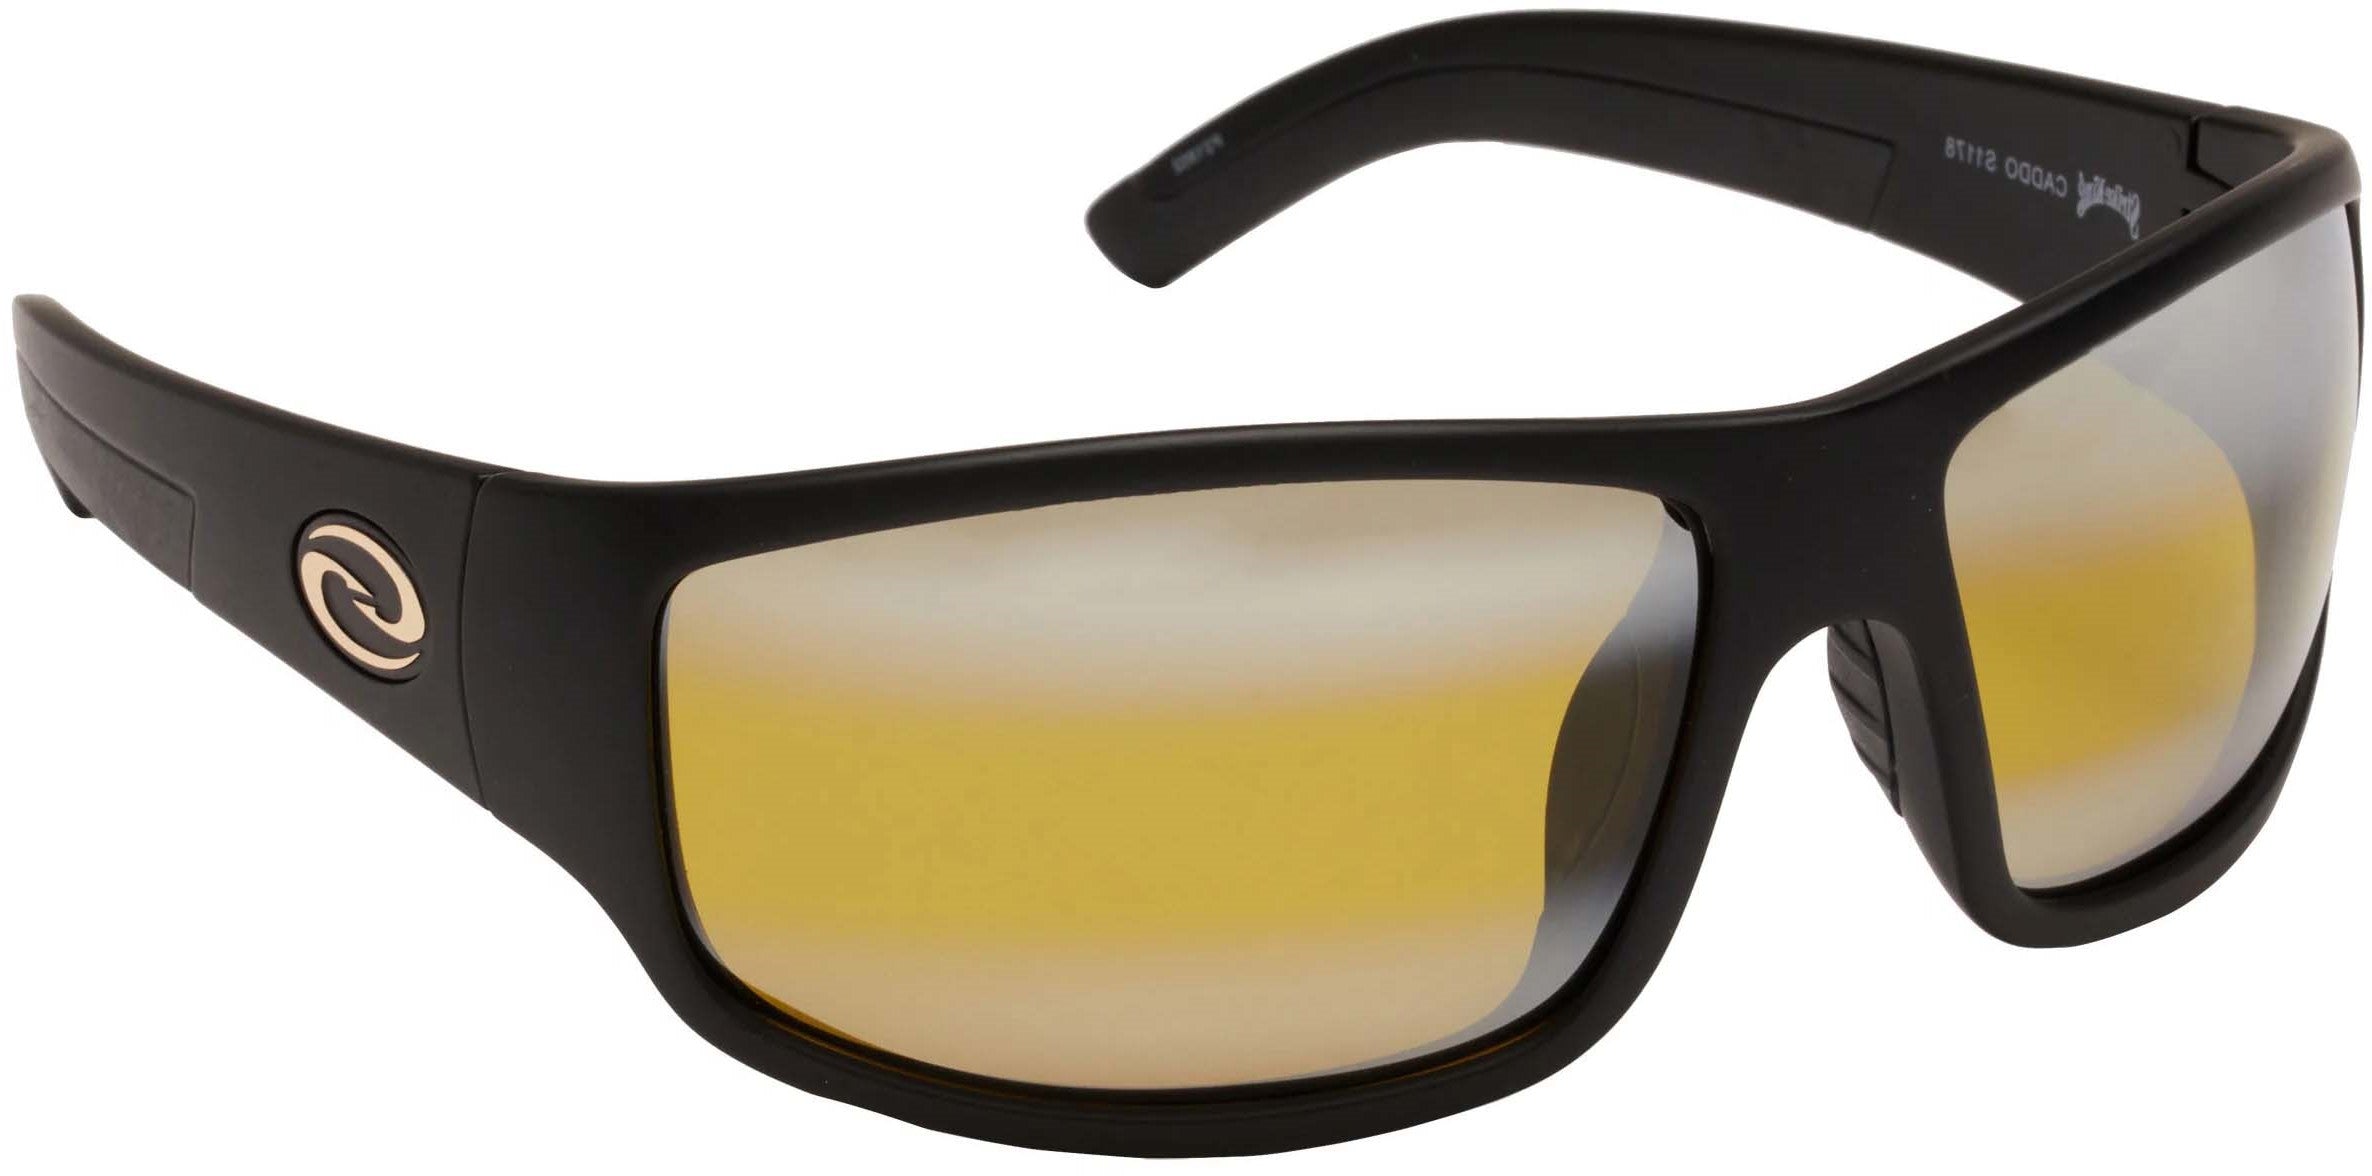 Strike King S11 Optics Sunglasses - £19.99